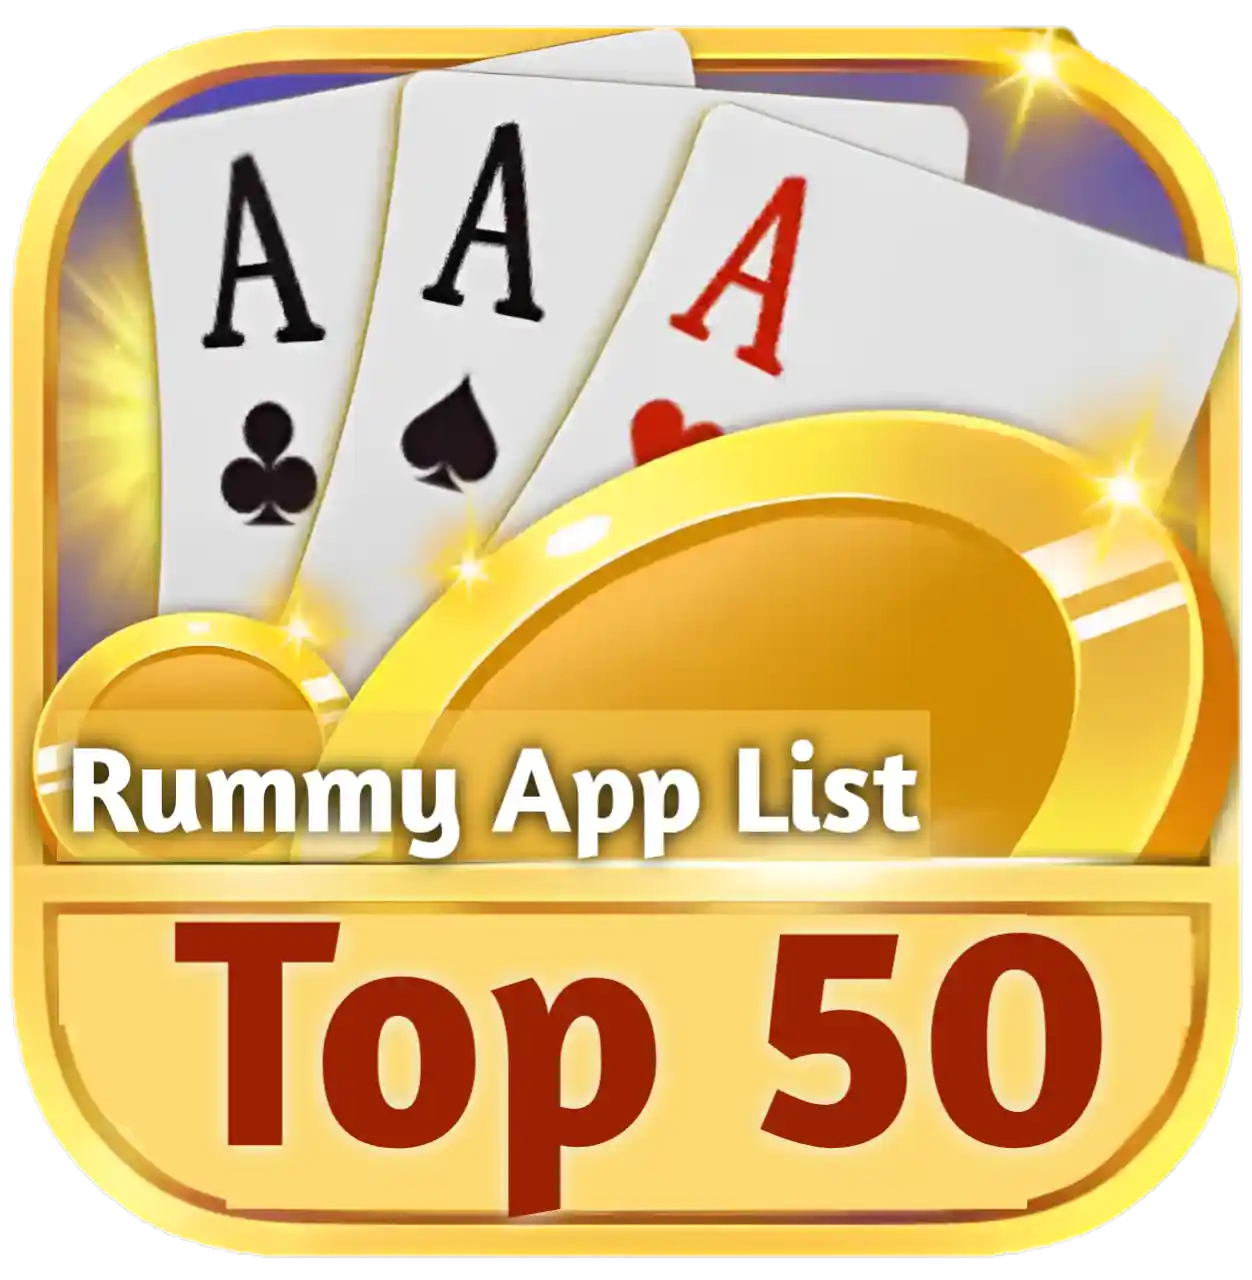 Top 50 Rummy App List Rummy App Supermarket List - Rummy App Supermarket